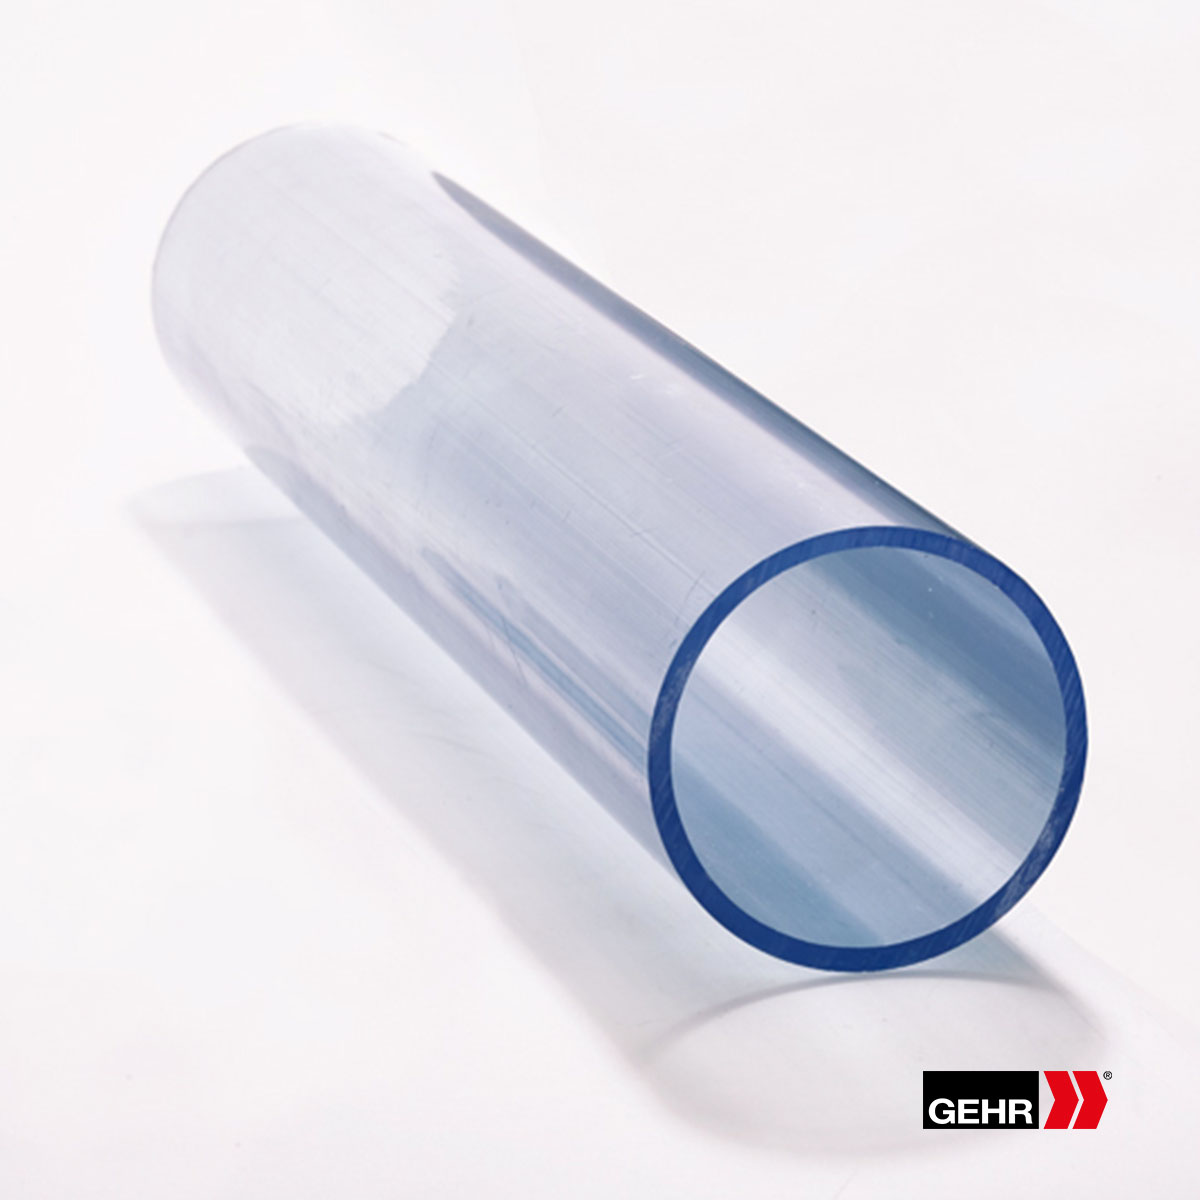 GEHR PVC-U Tubes 10 x 1.2 mm (unite = 10 pce) transparent